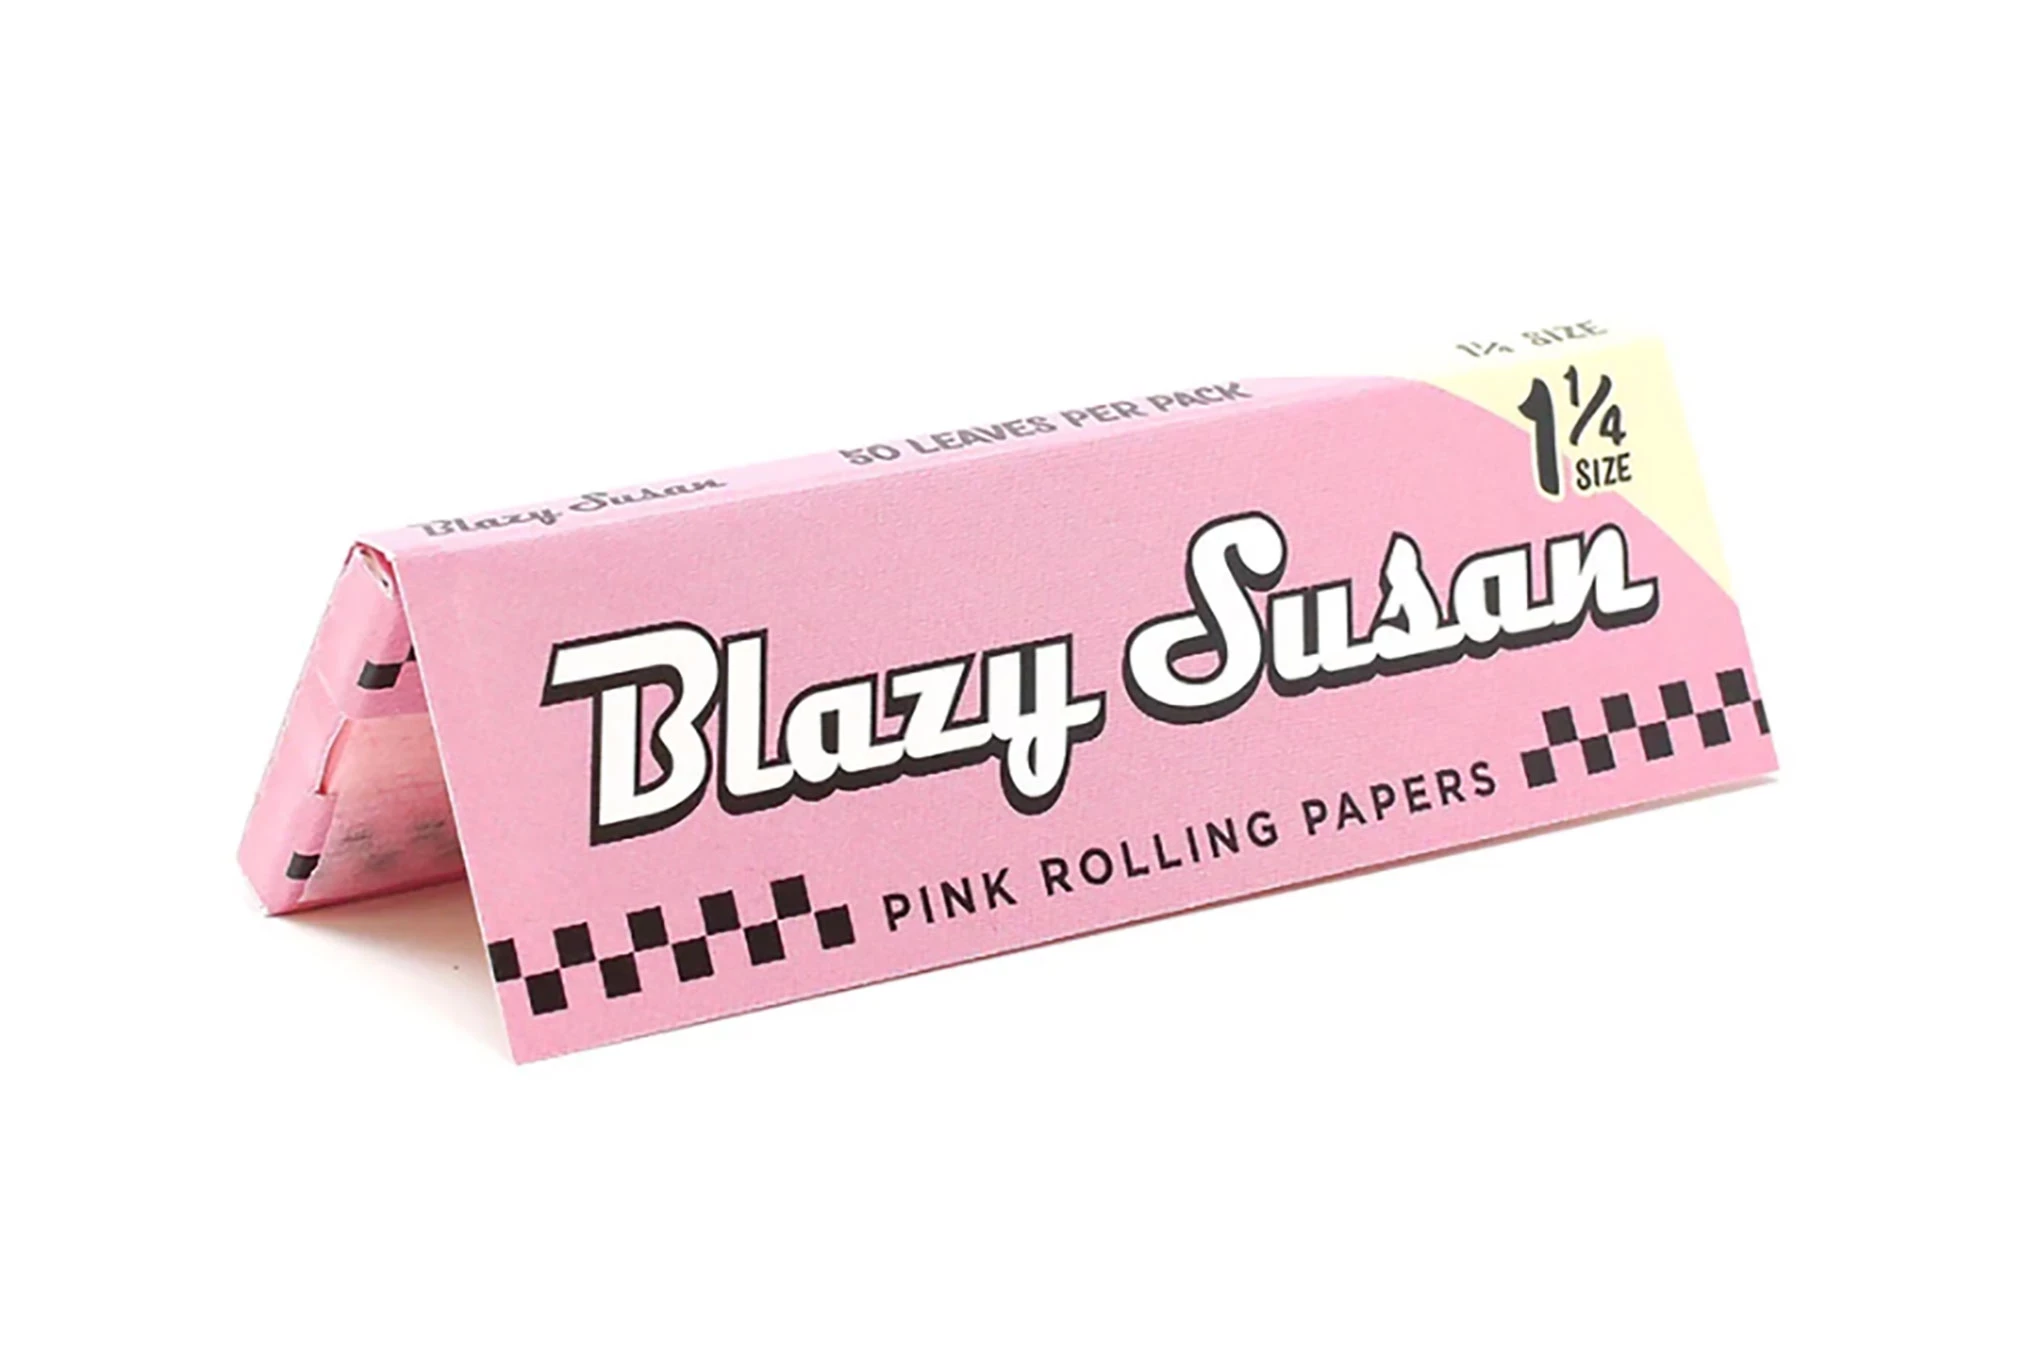 blazy susan rolling paper